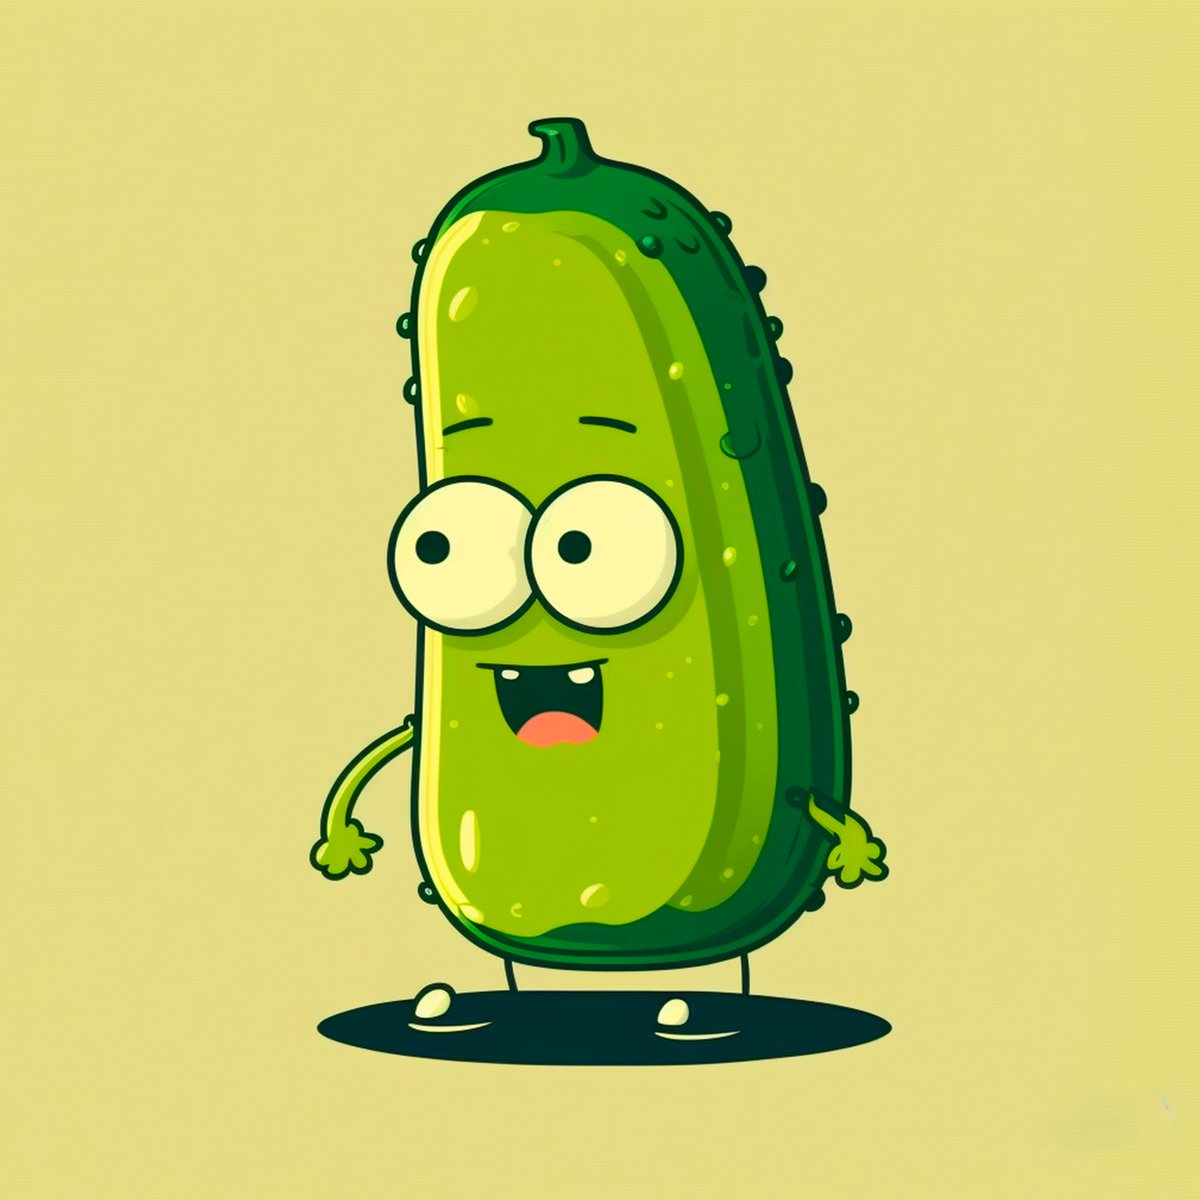 Funny Pickle! 🥒❤
.
🛒 Available in: linktr.ee/lartoficial
.
#funnypicke #pickle #vegetable #funnyvegetable #cartoon #cartoonpickle #cute #cutepickle #picklevegetable #food #funny #happy #vegetableart #pickeart #art #drawing #illustration #digitalart #redbubble #teepublic